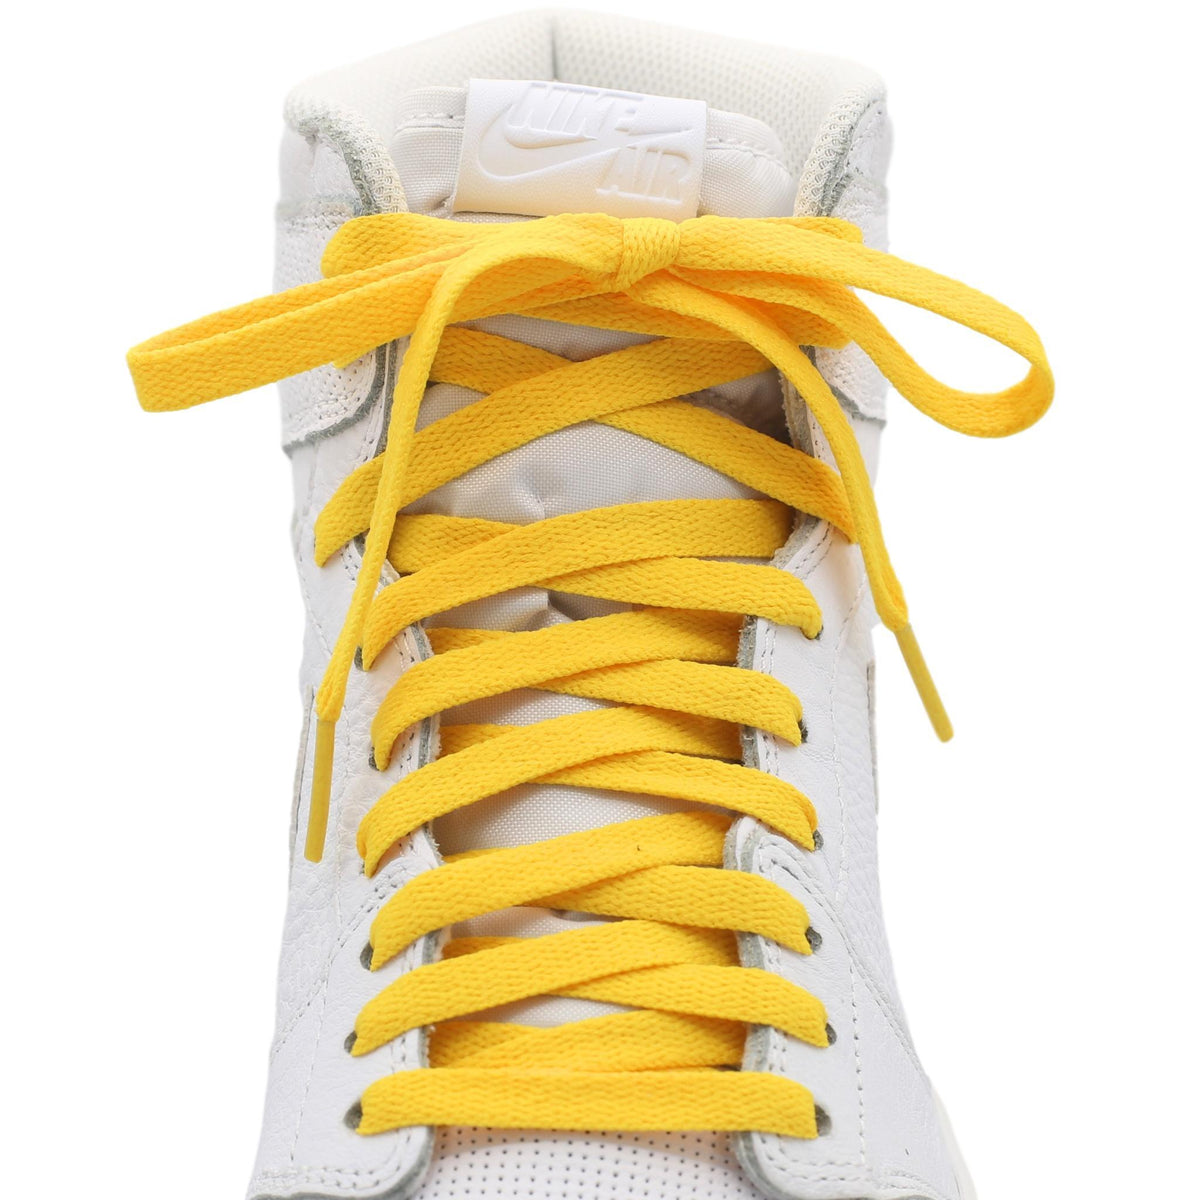 yellow shoe strings